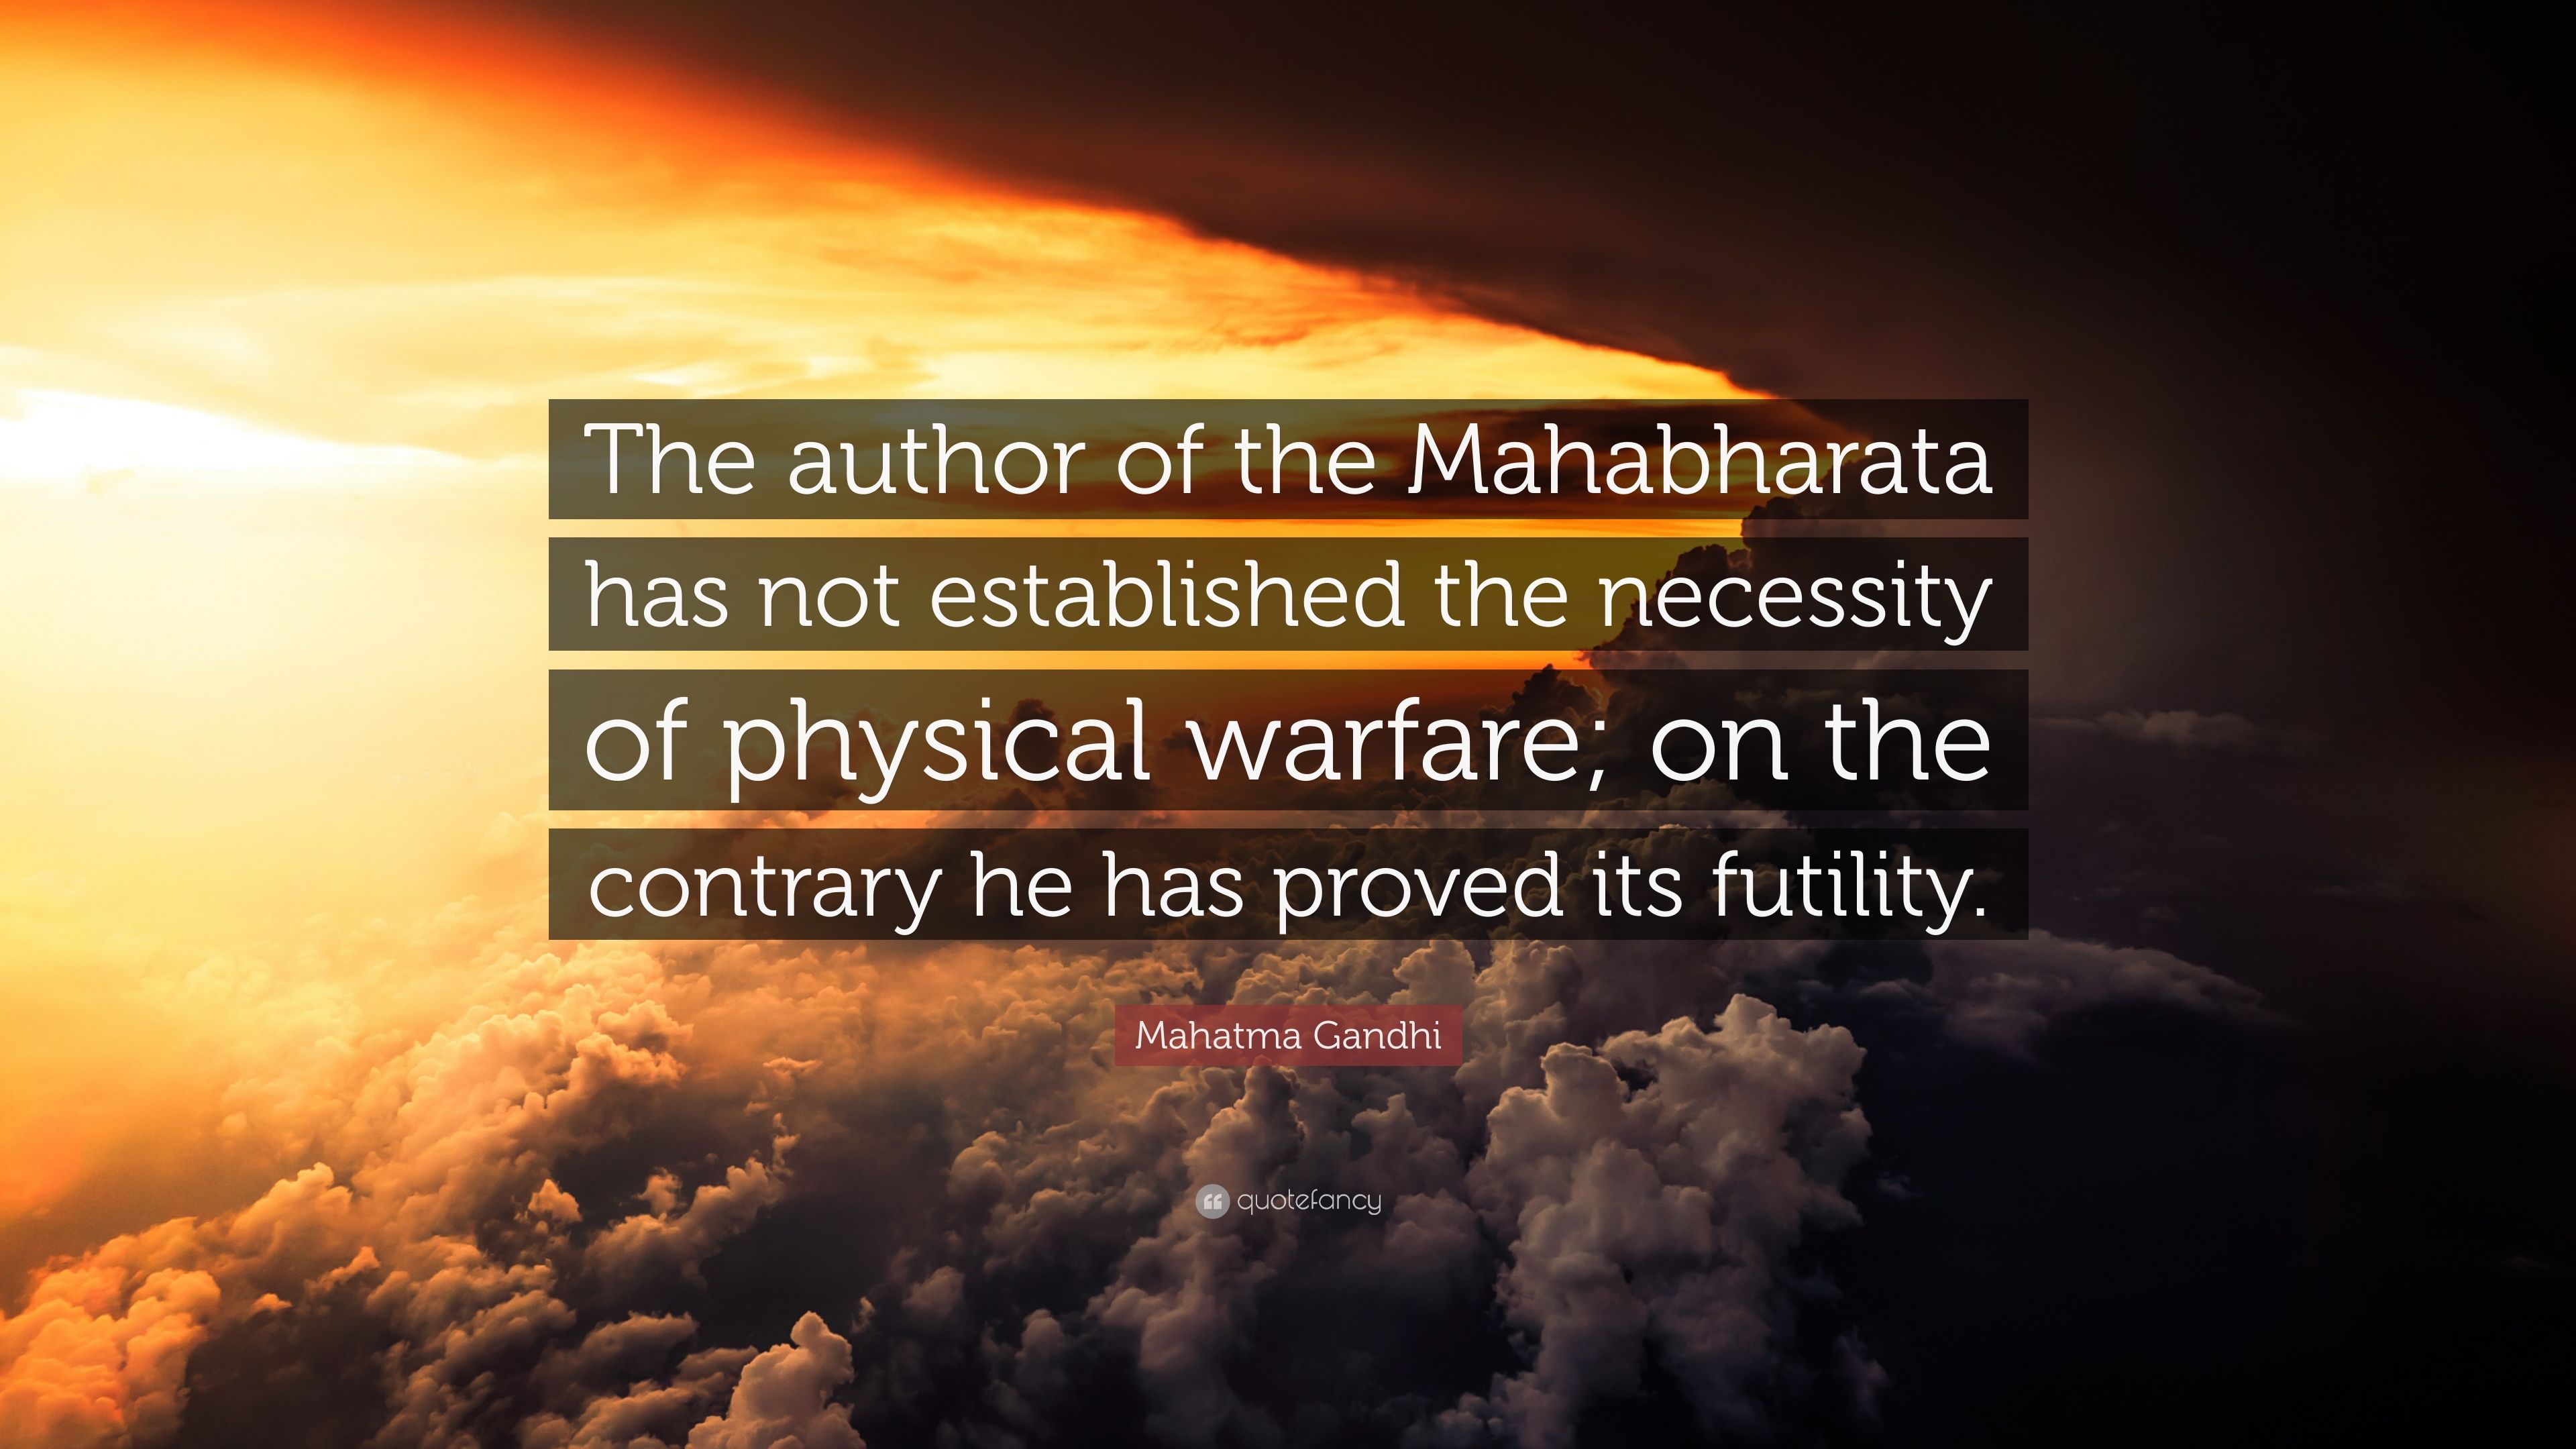 Mahatma Gandhi Quote: “The author of the Mahabharata has not